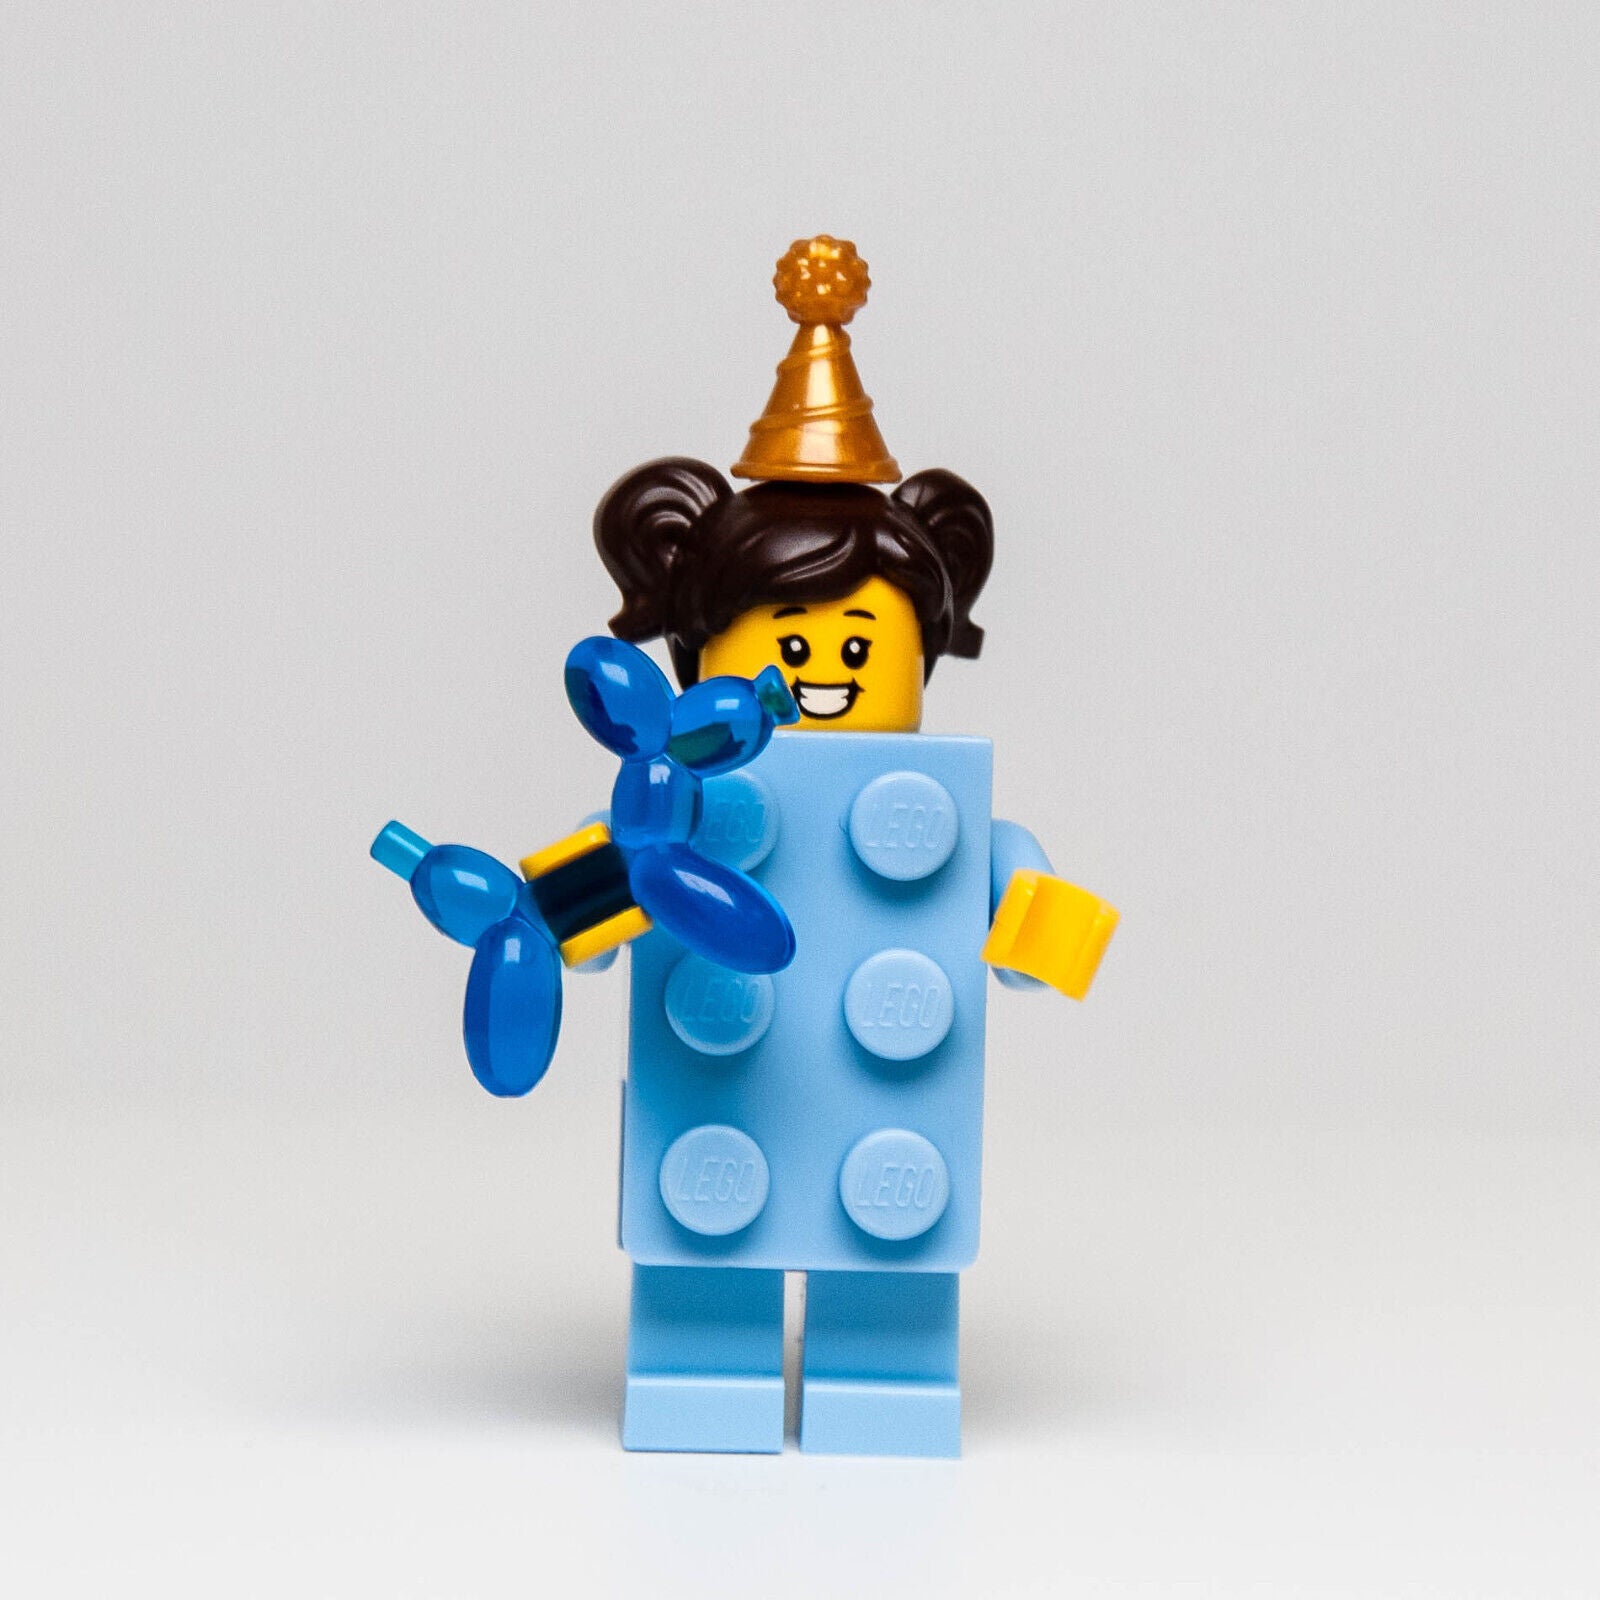 New Lego BAM Minifigure (hol298)Birthday Brick Suit Costume Girl w/ Balloon Dog